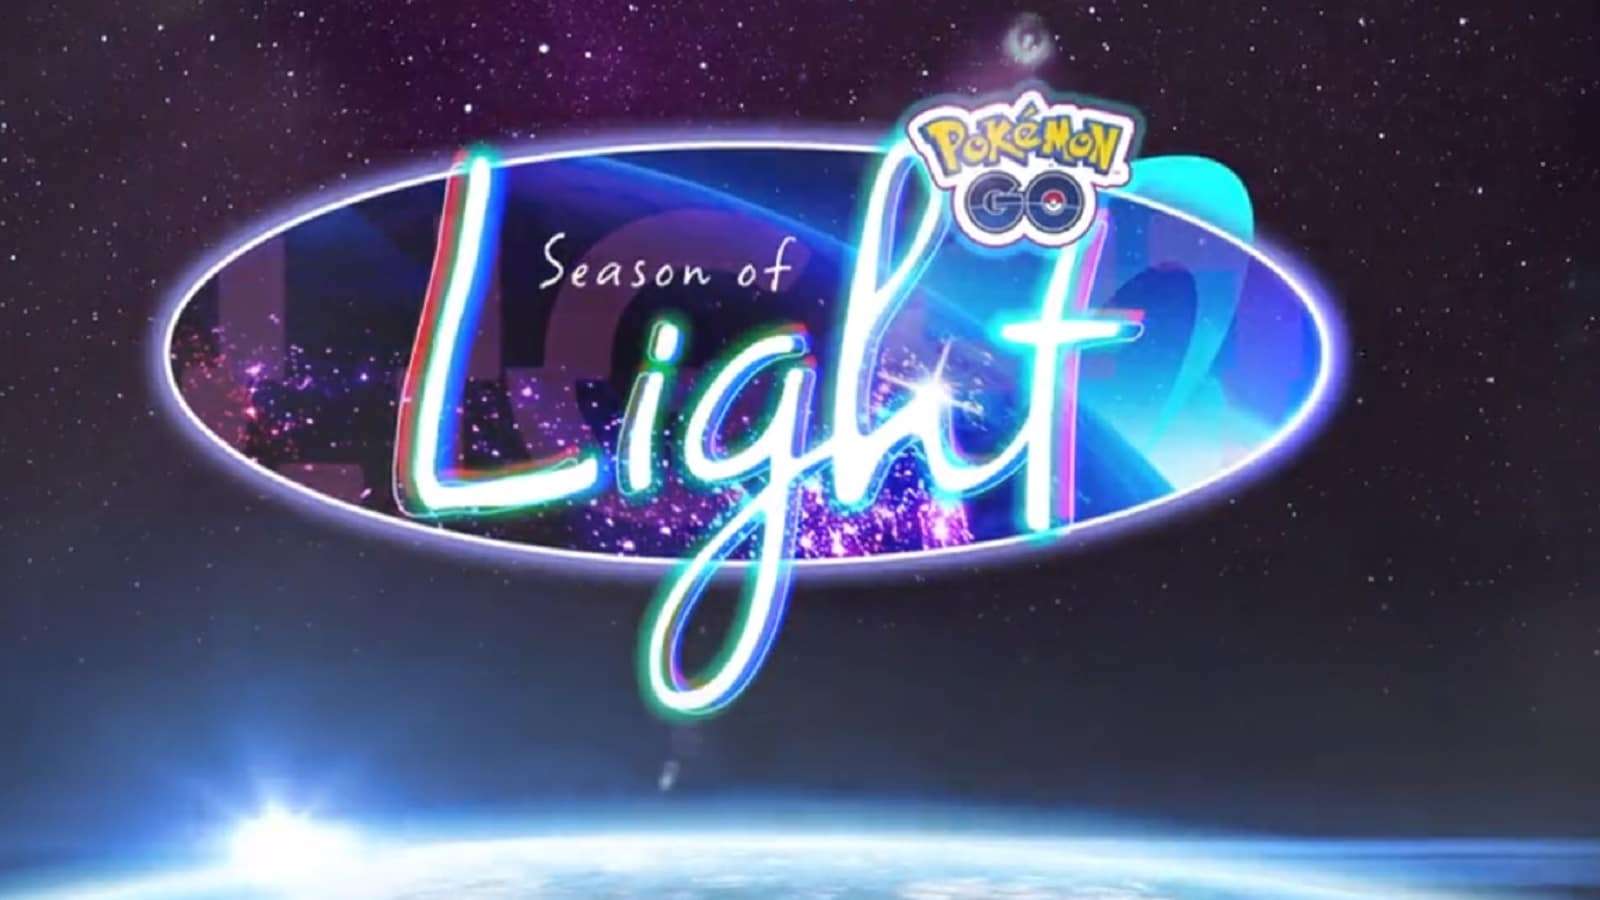 Pokemon-Go-Season-of-light-dates-times-event